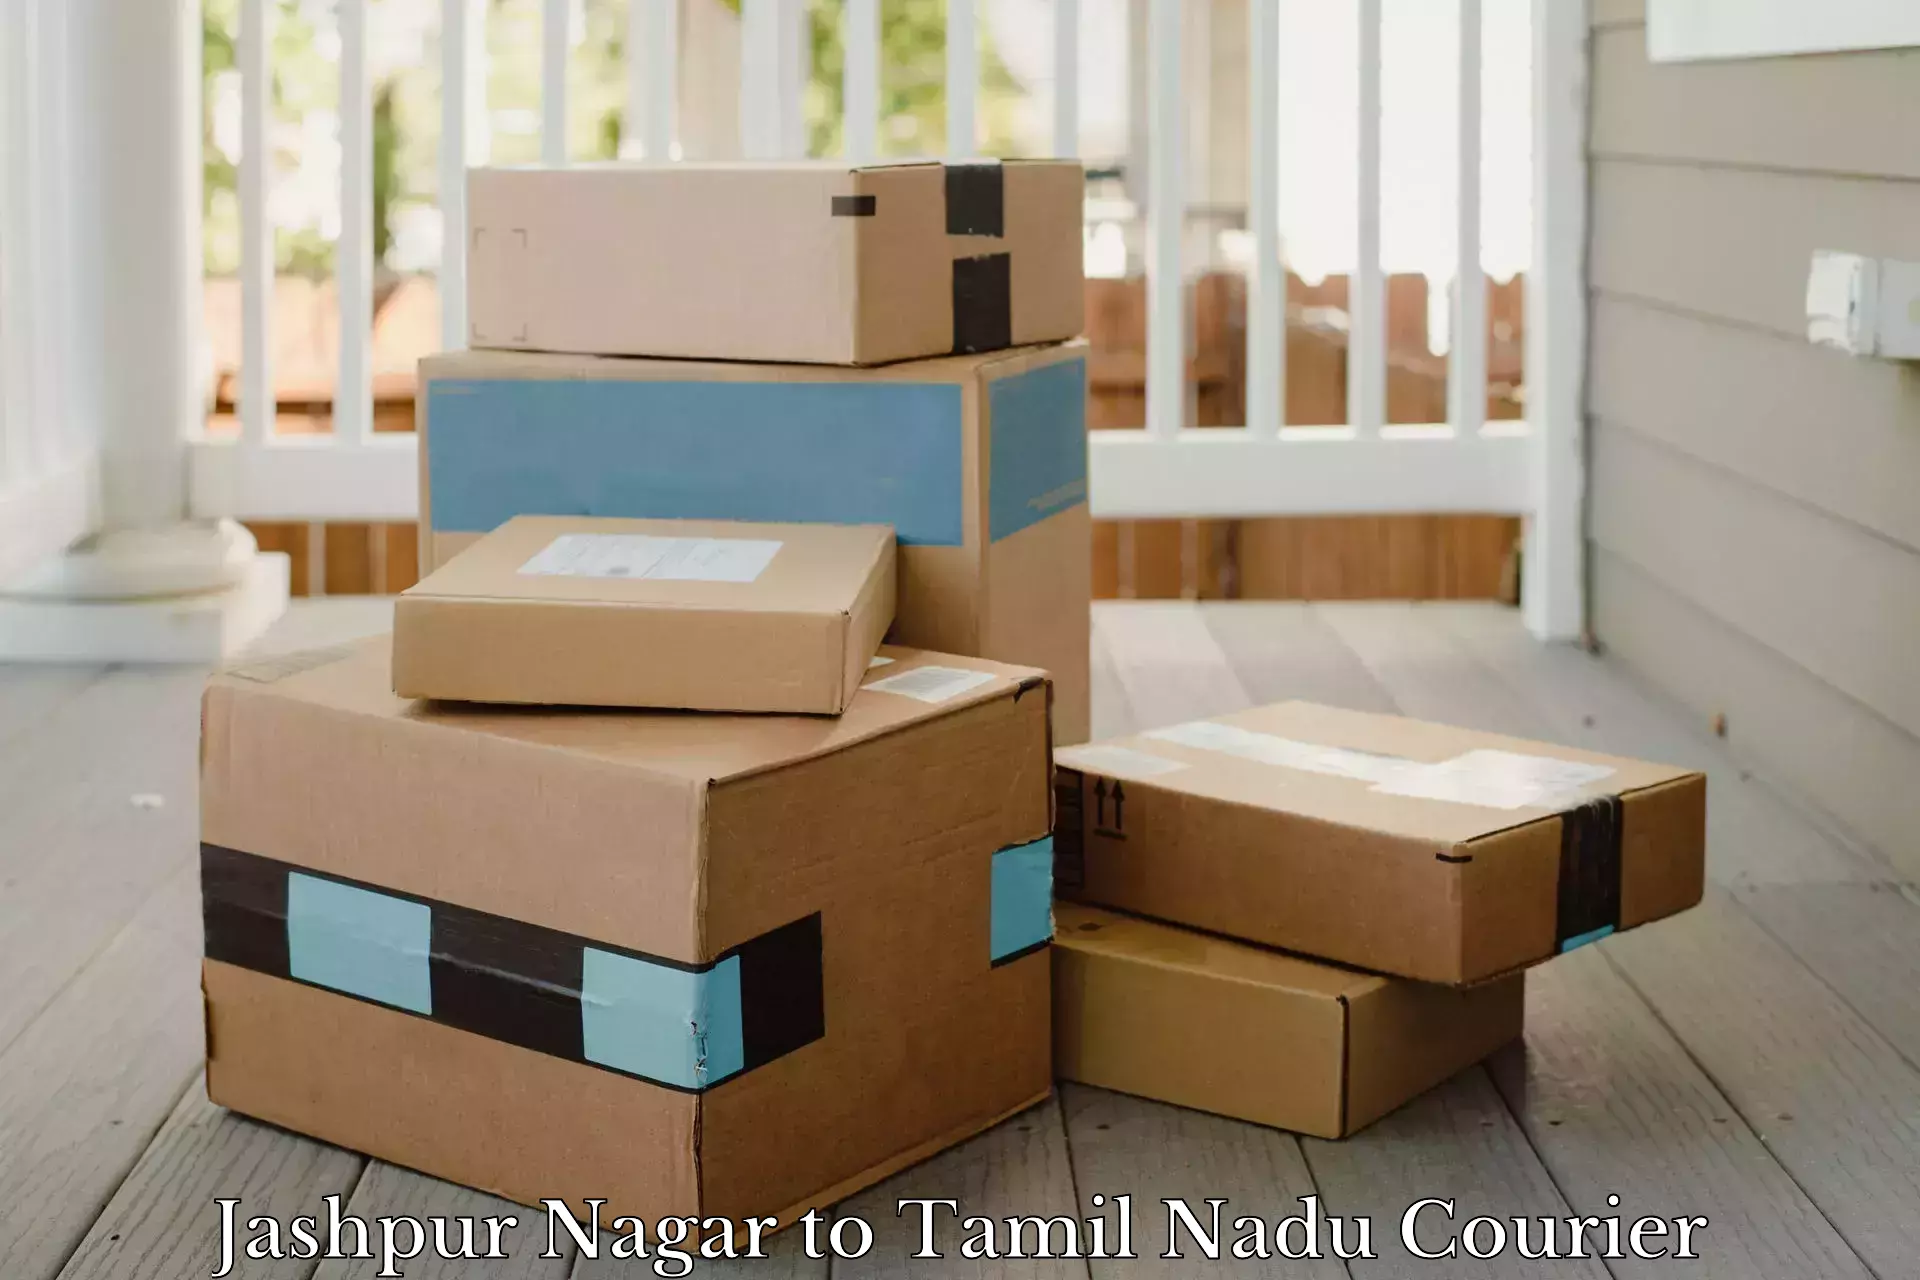 Full-service courier options Jashpur Nagar to Melmaruvathur